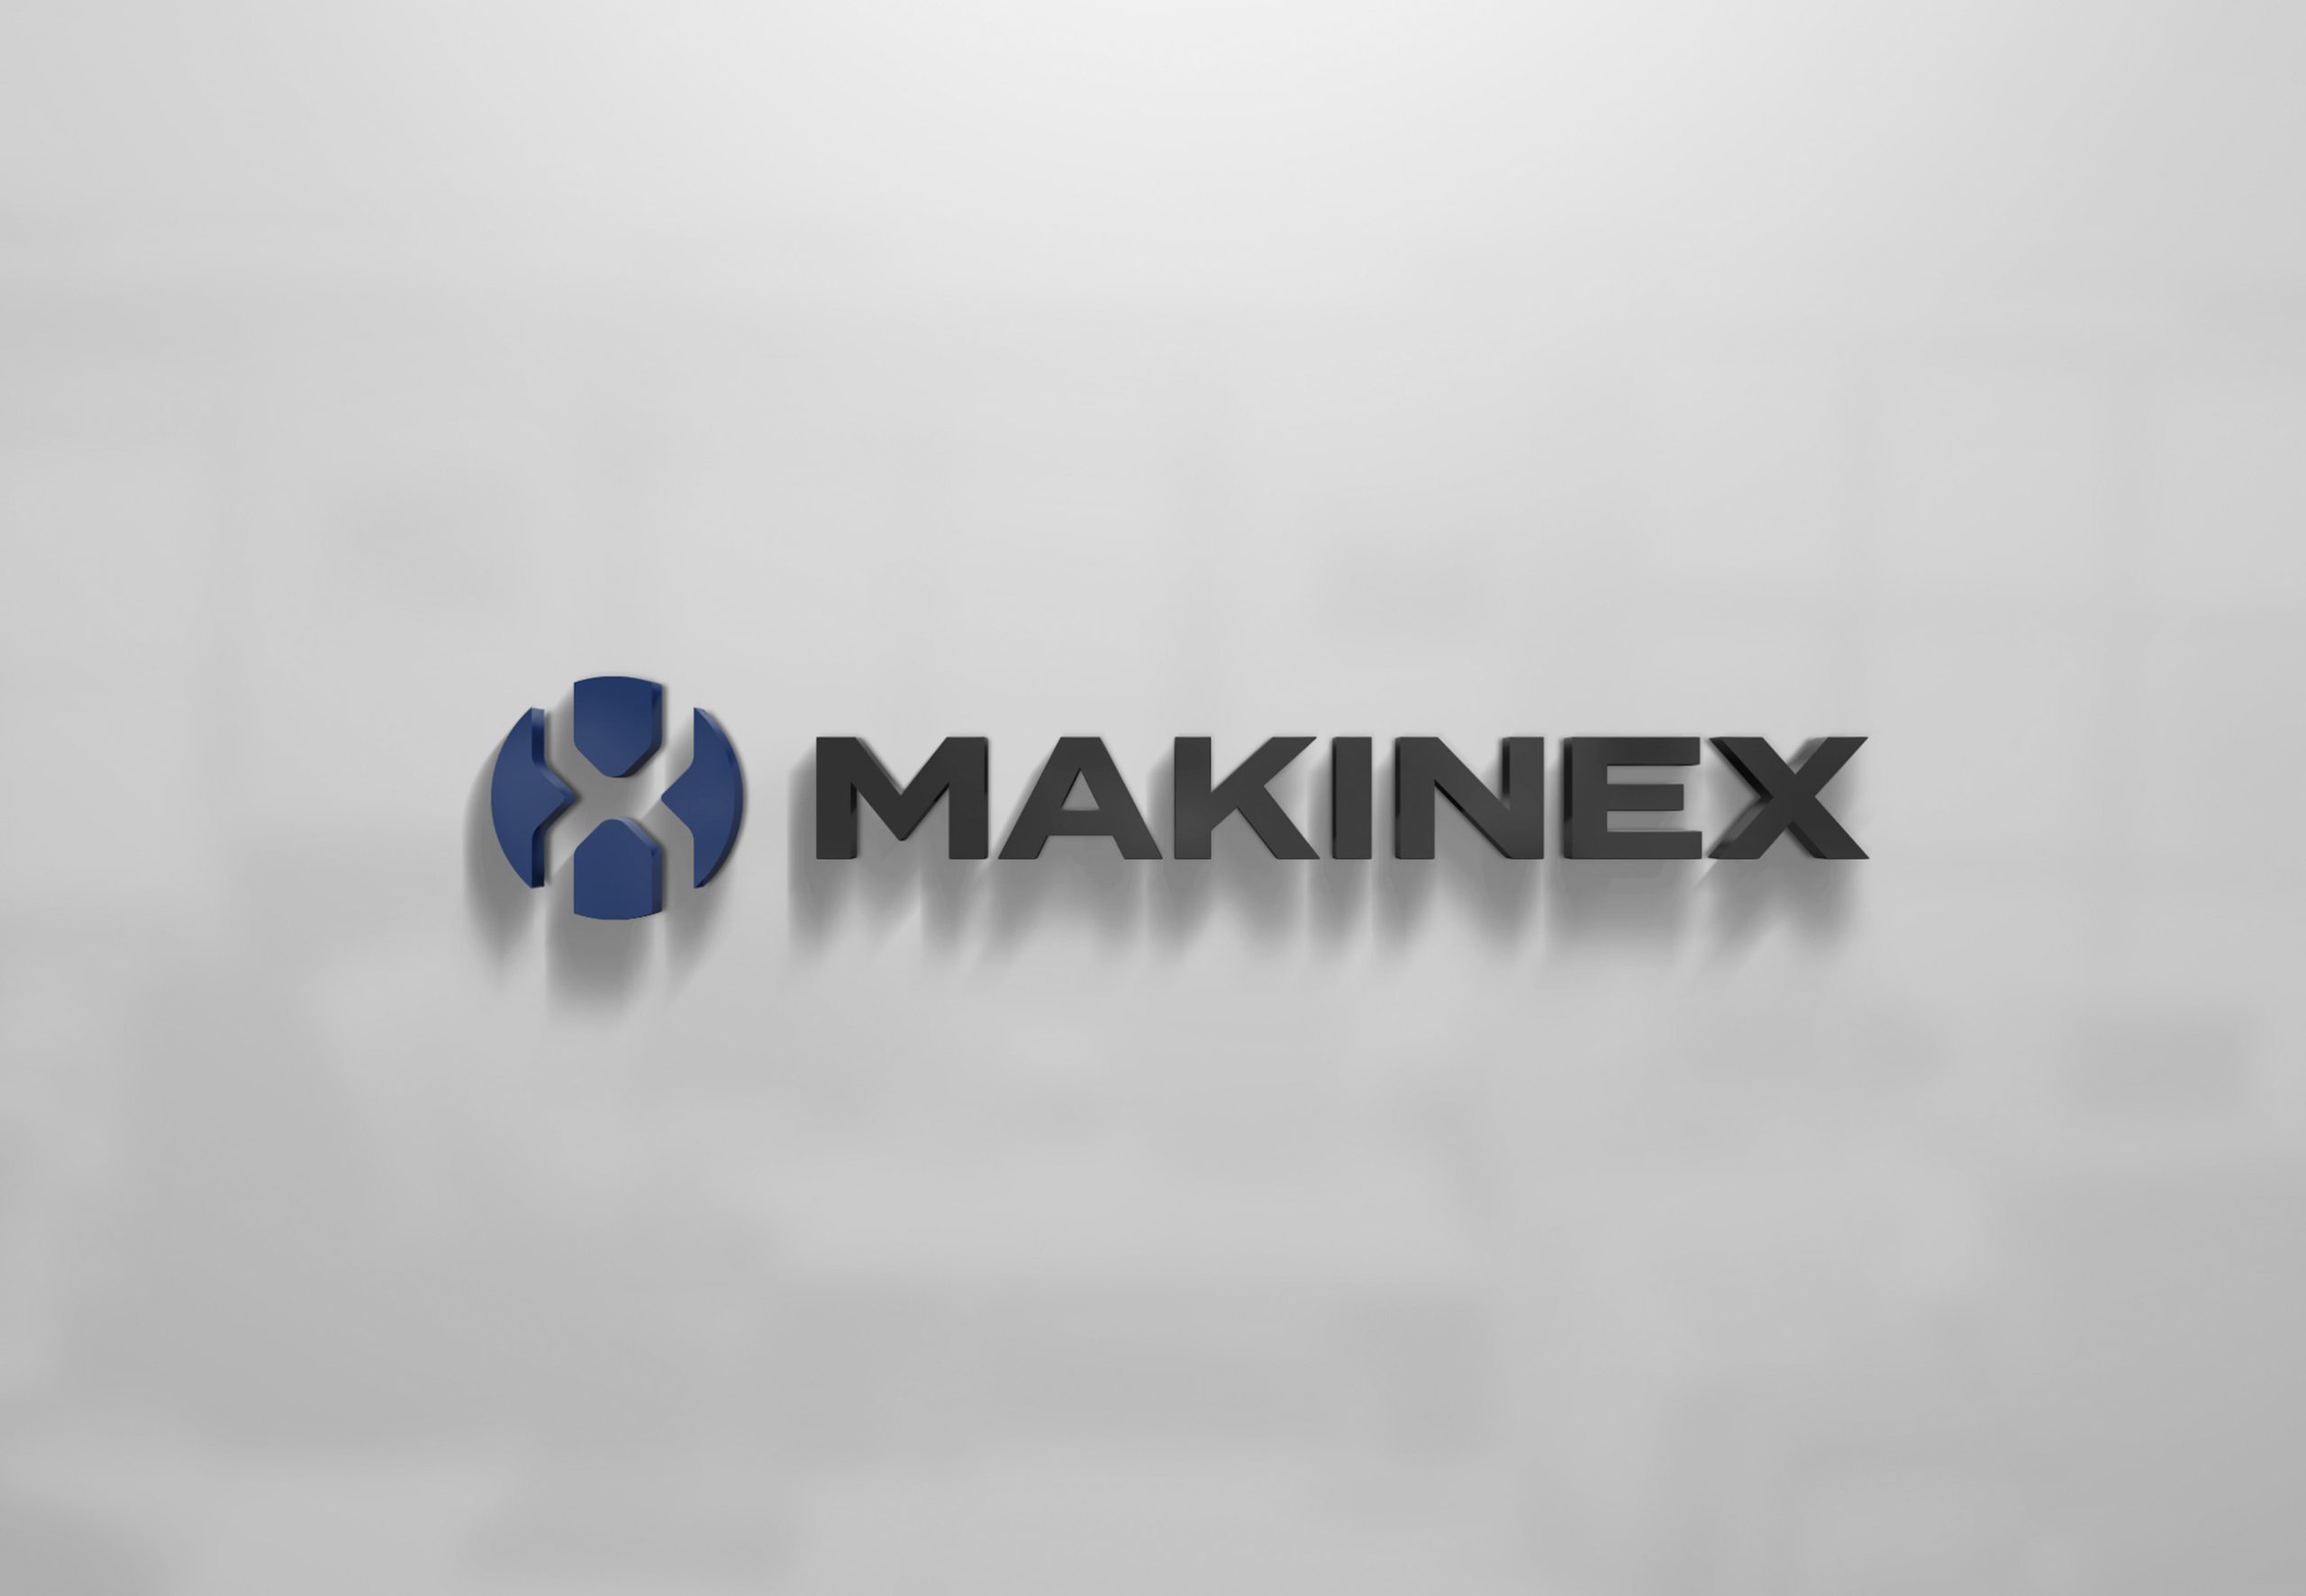 Makinex Signage